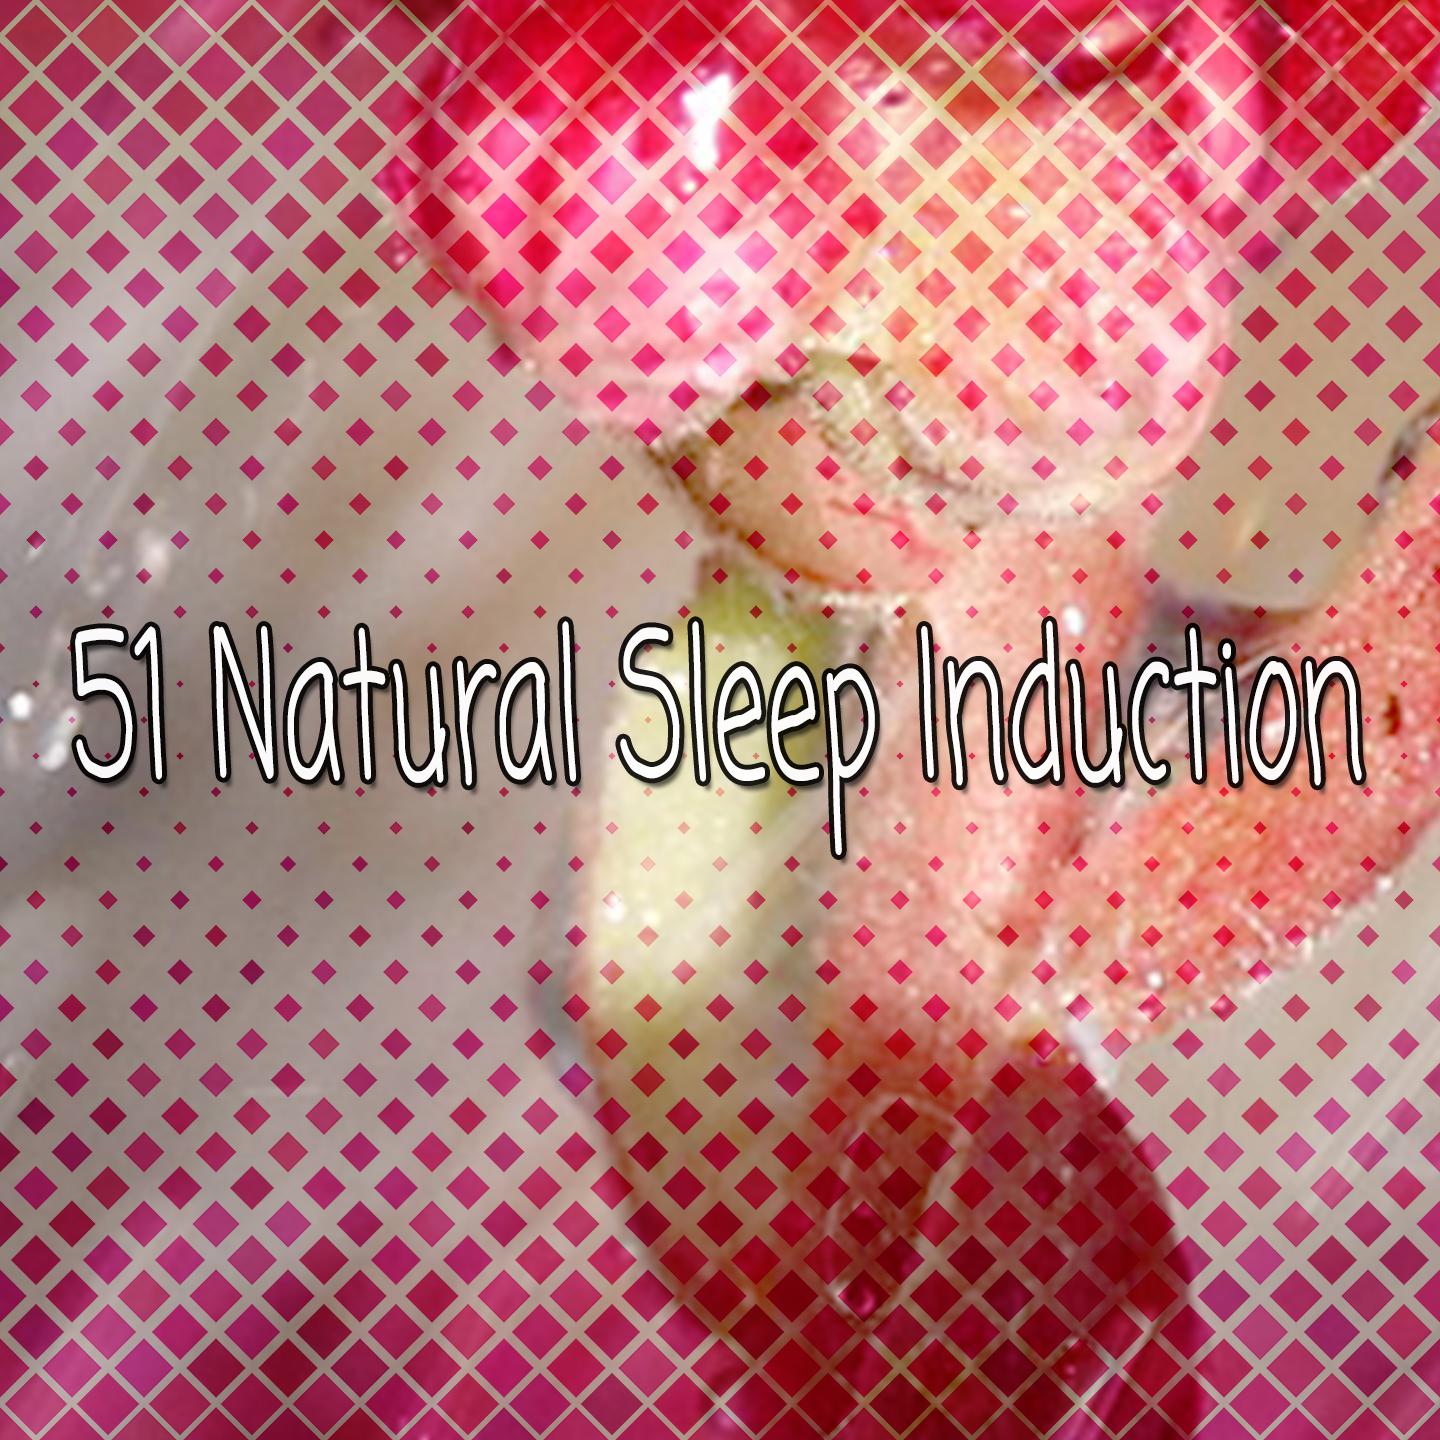 51 Natural Sleep Induction